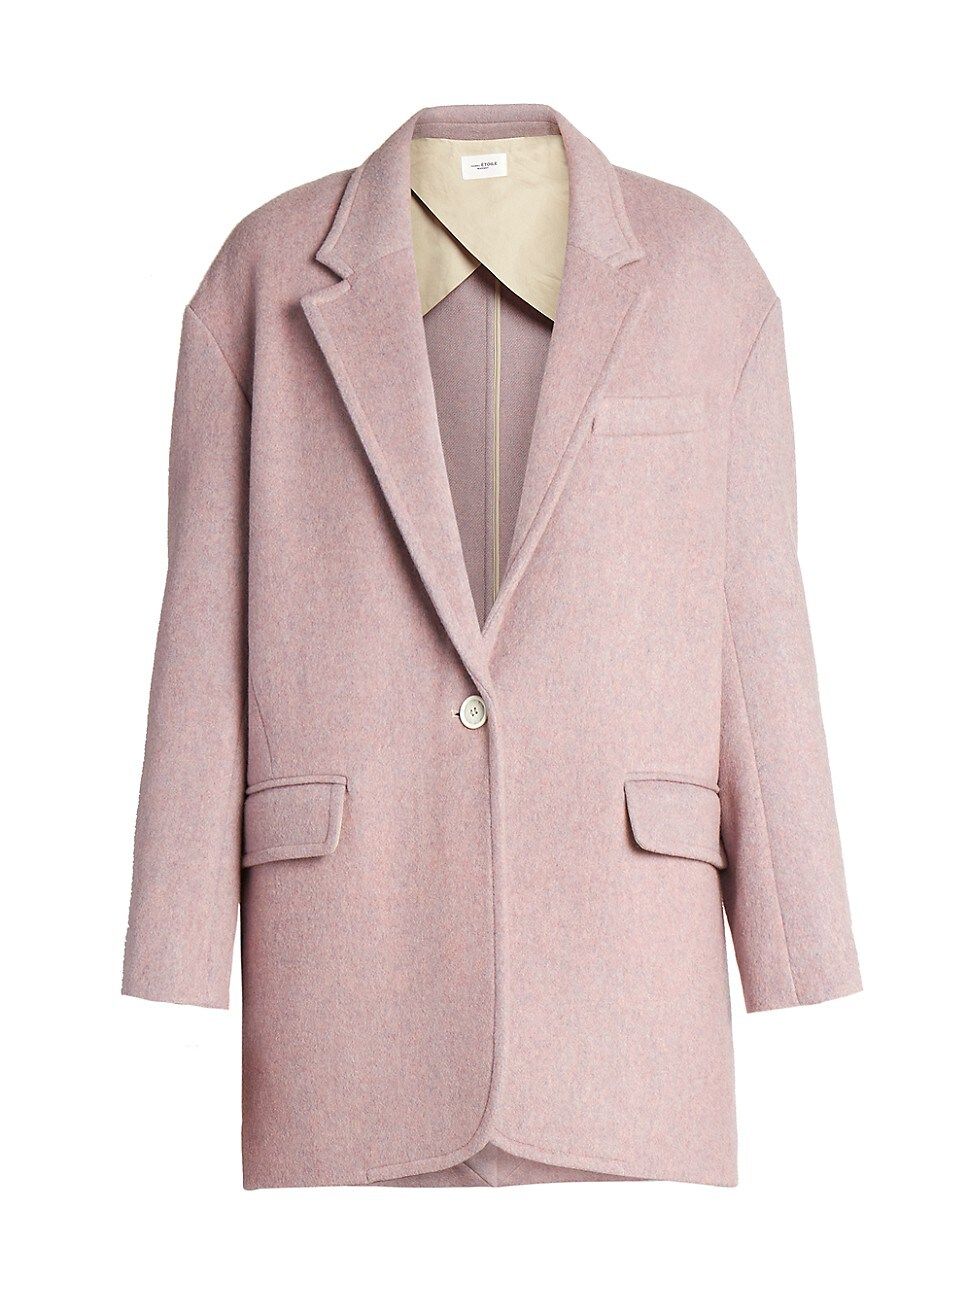 Isabel Marant Etoile Women's Latty Blazer Coat - Light Pink - Size 44 (12) | Saks Fifth Avenue